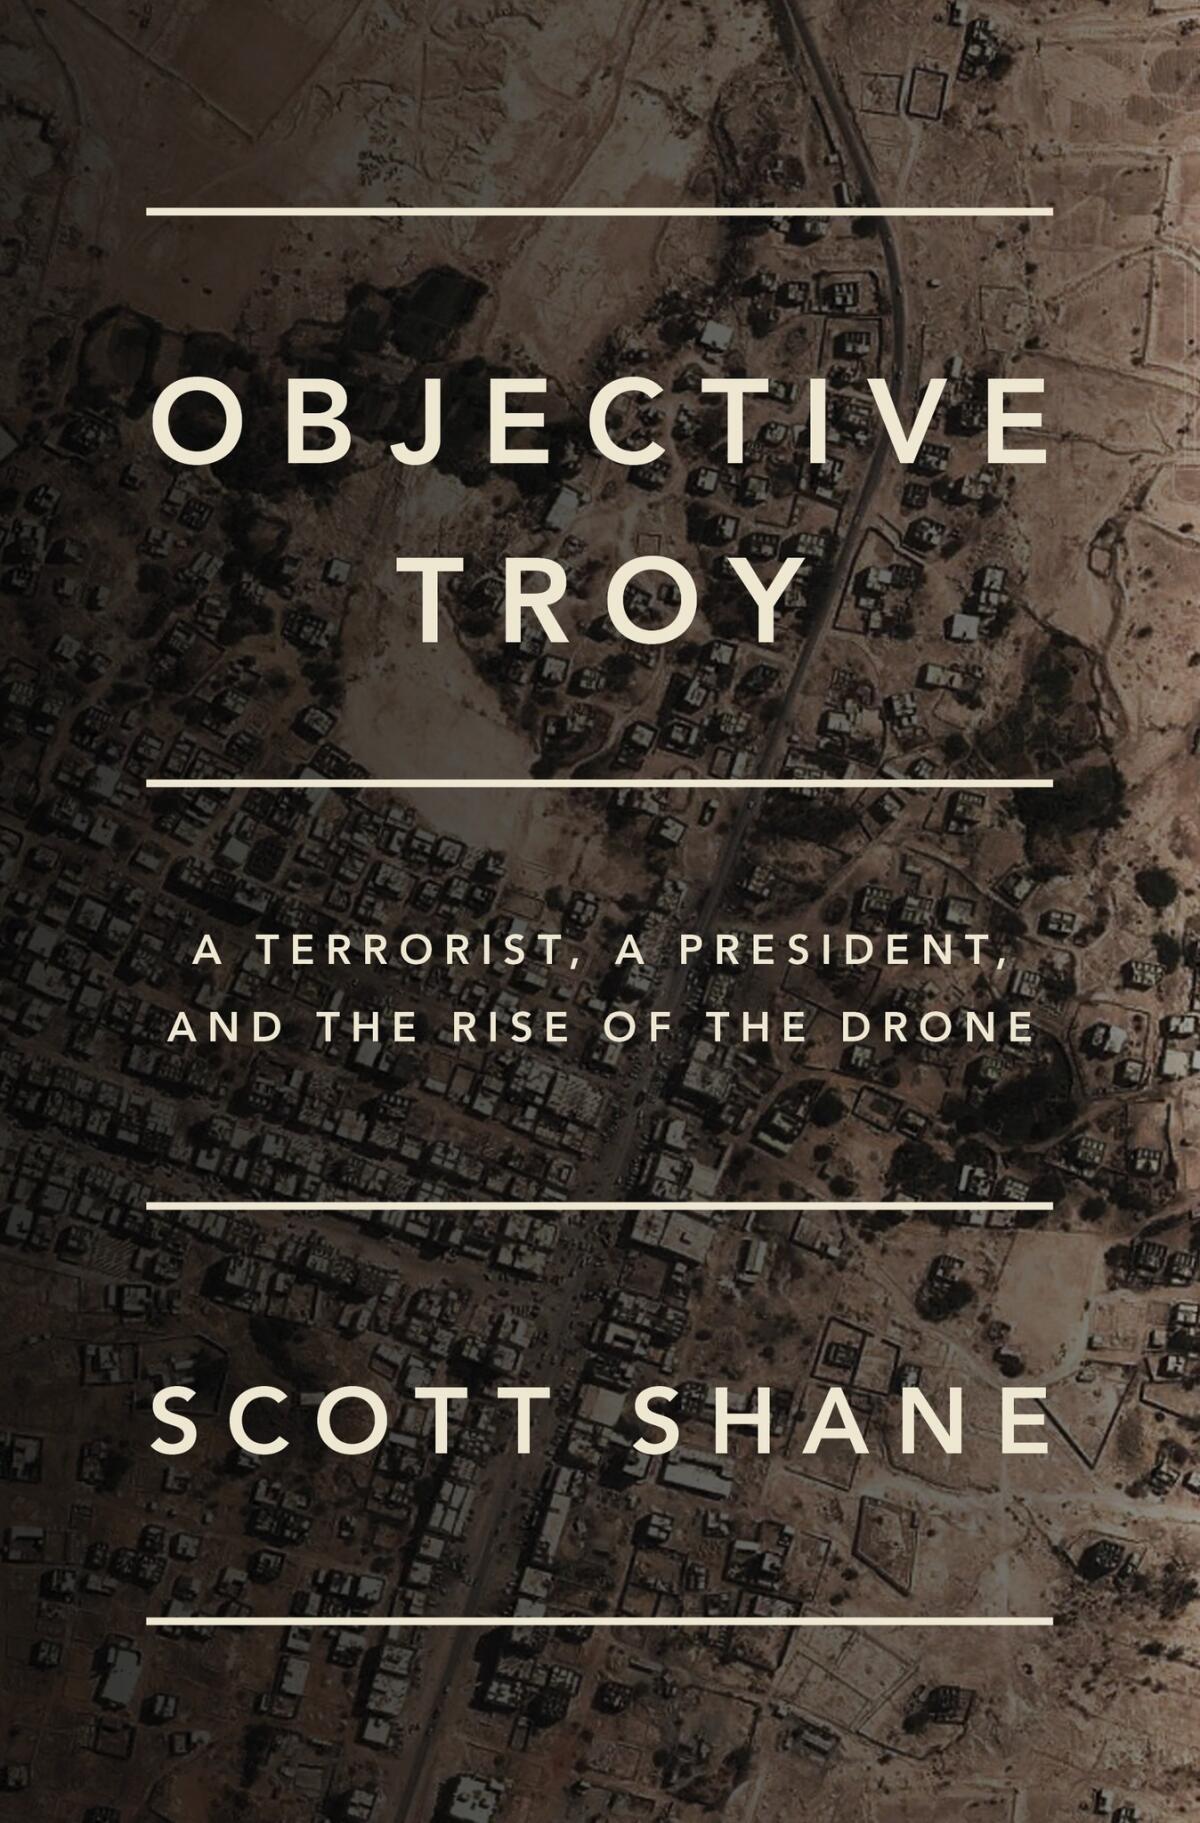 "Objective Troy" by Scott Shane